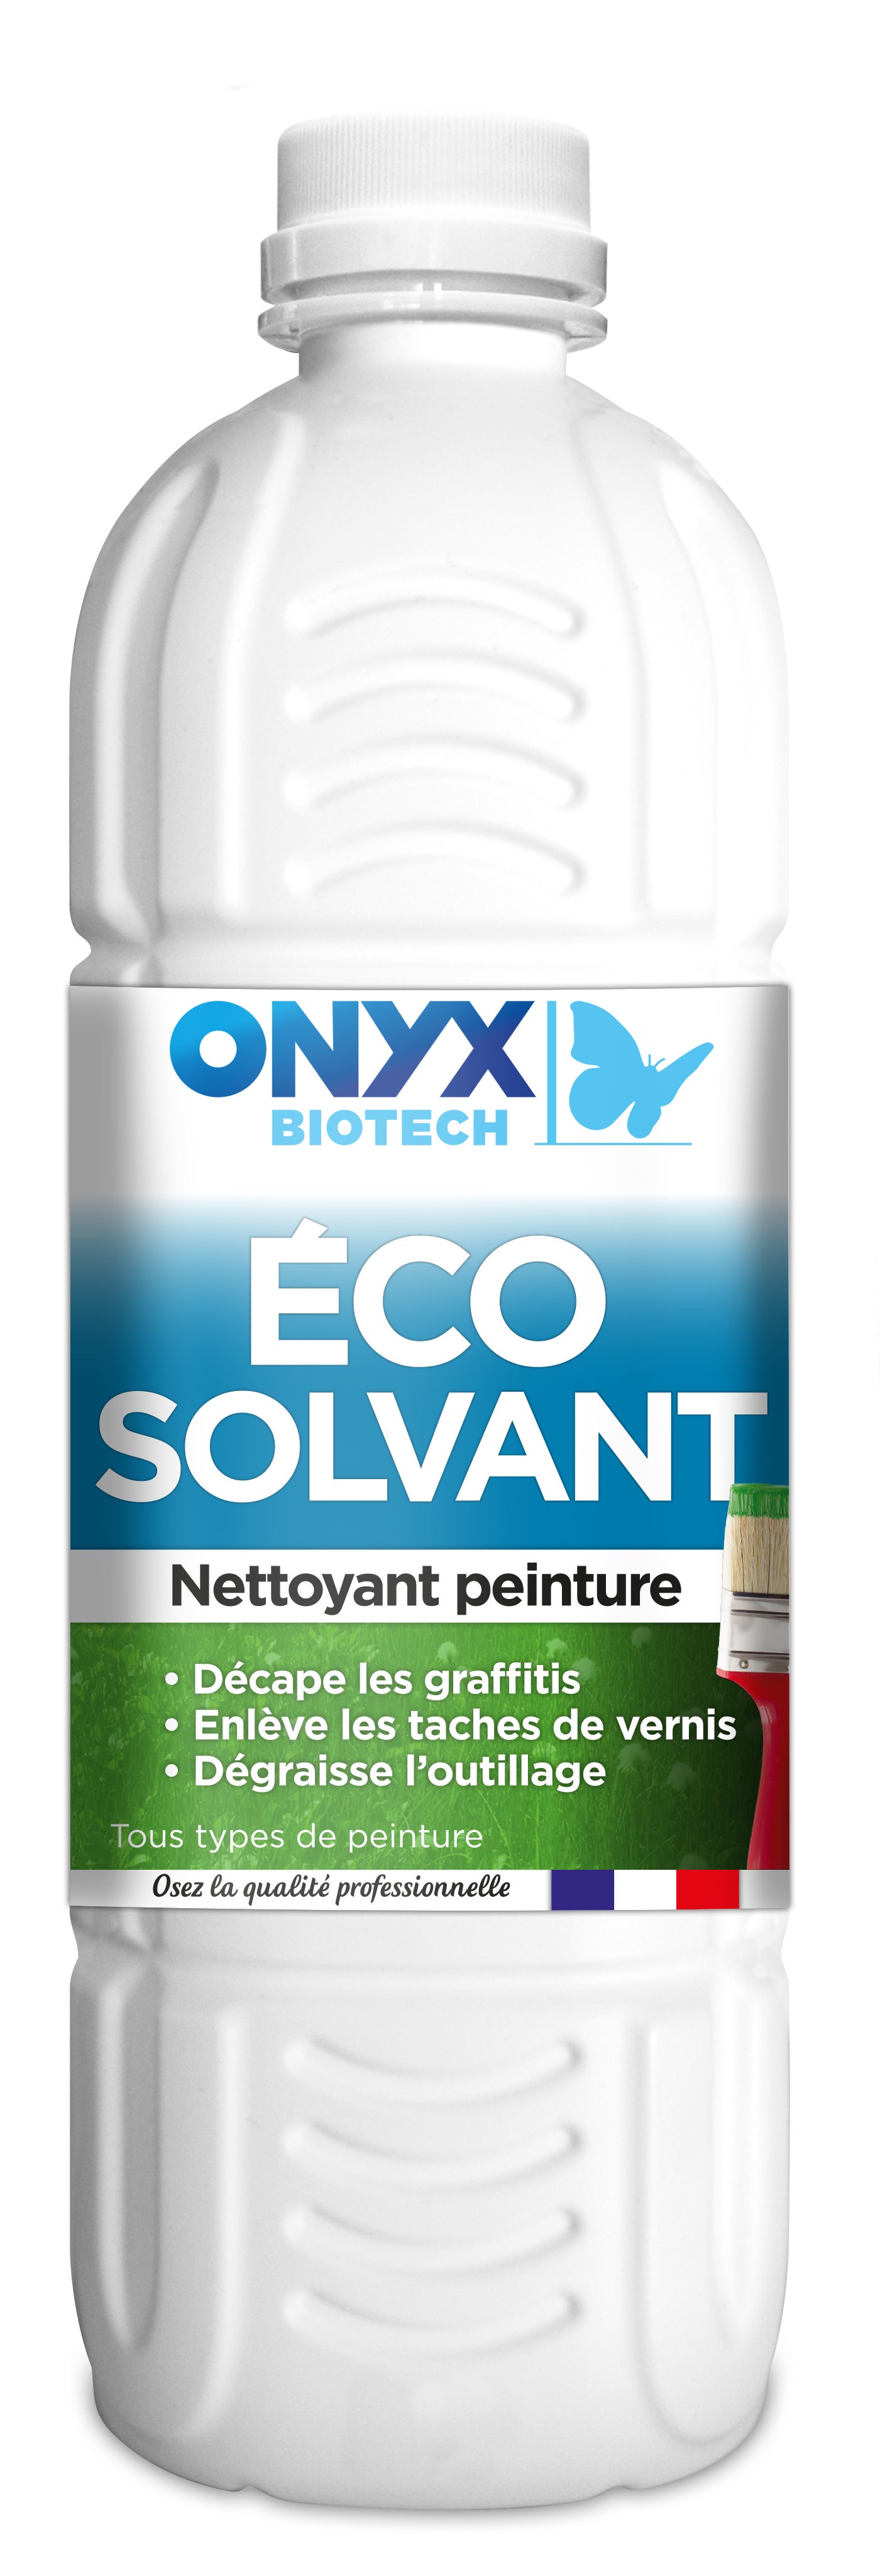 eco solvant ecologique onyx 1 l leroy merlin